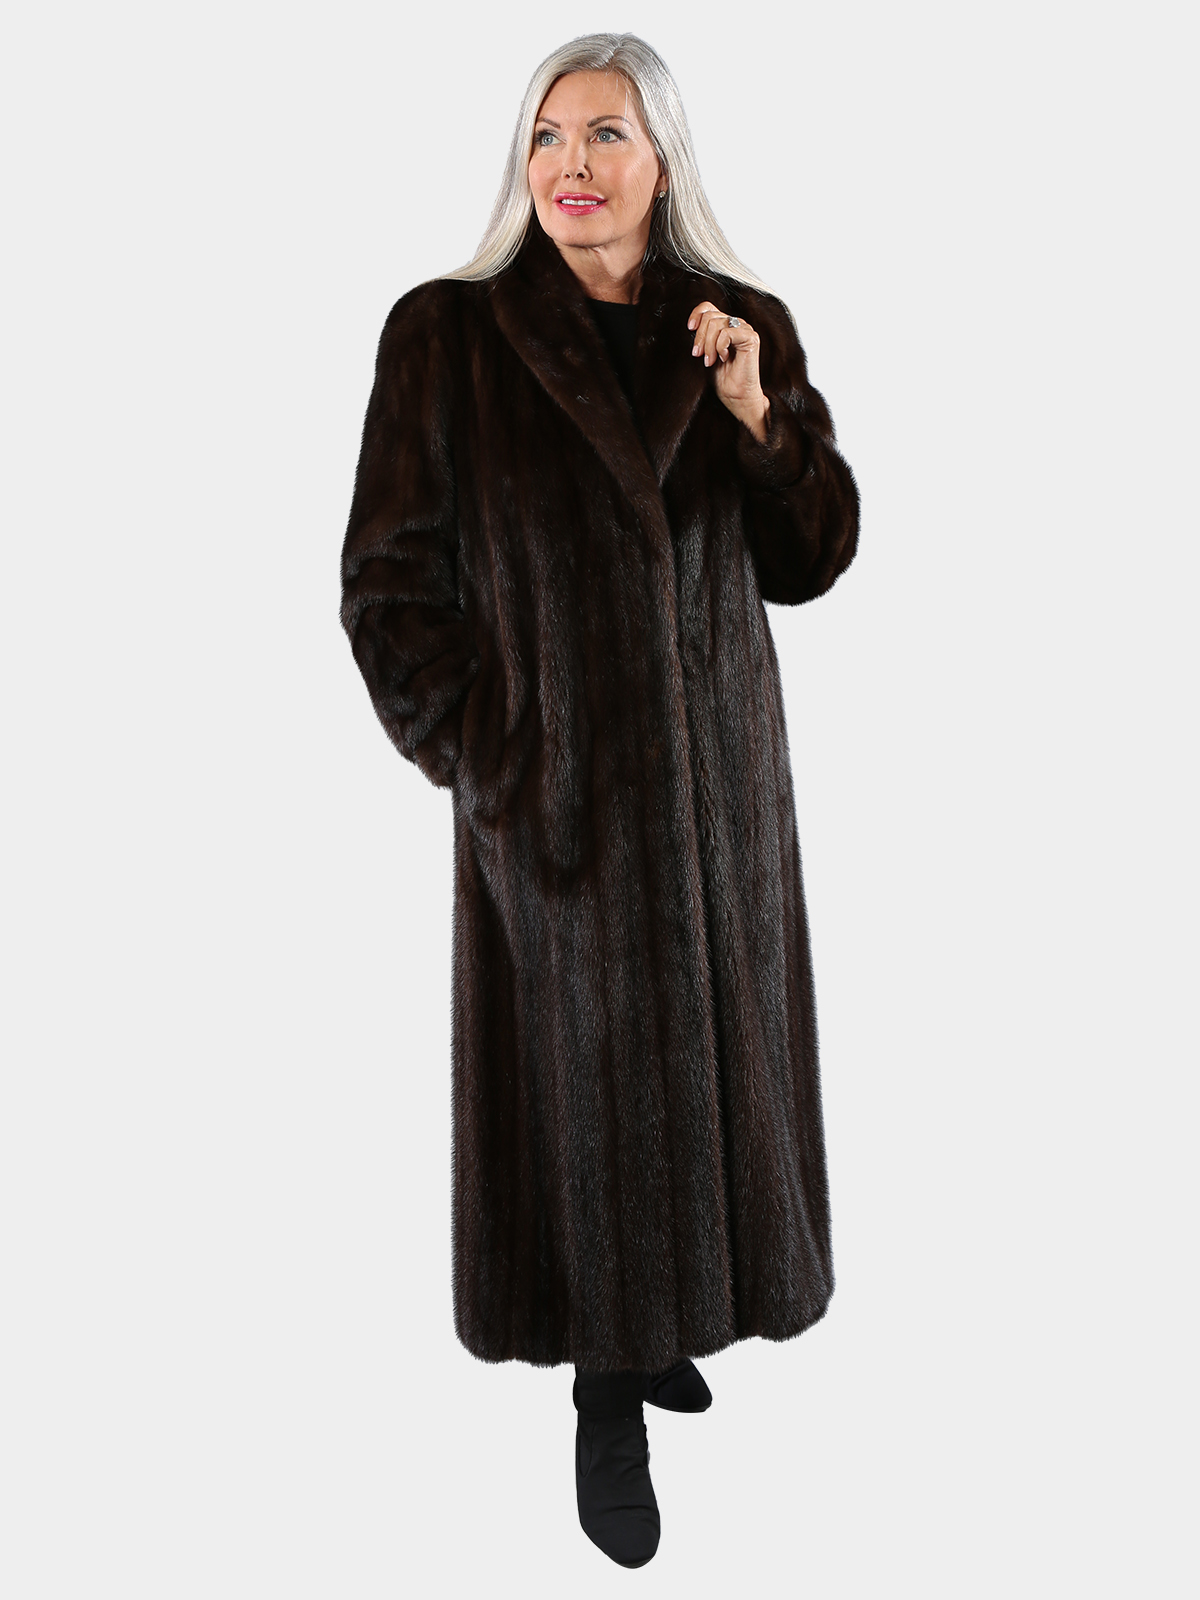 Mahogany Female Mink Fur Coat (Women's Large) - Estate Furs